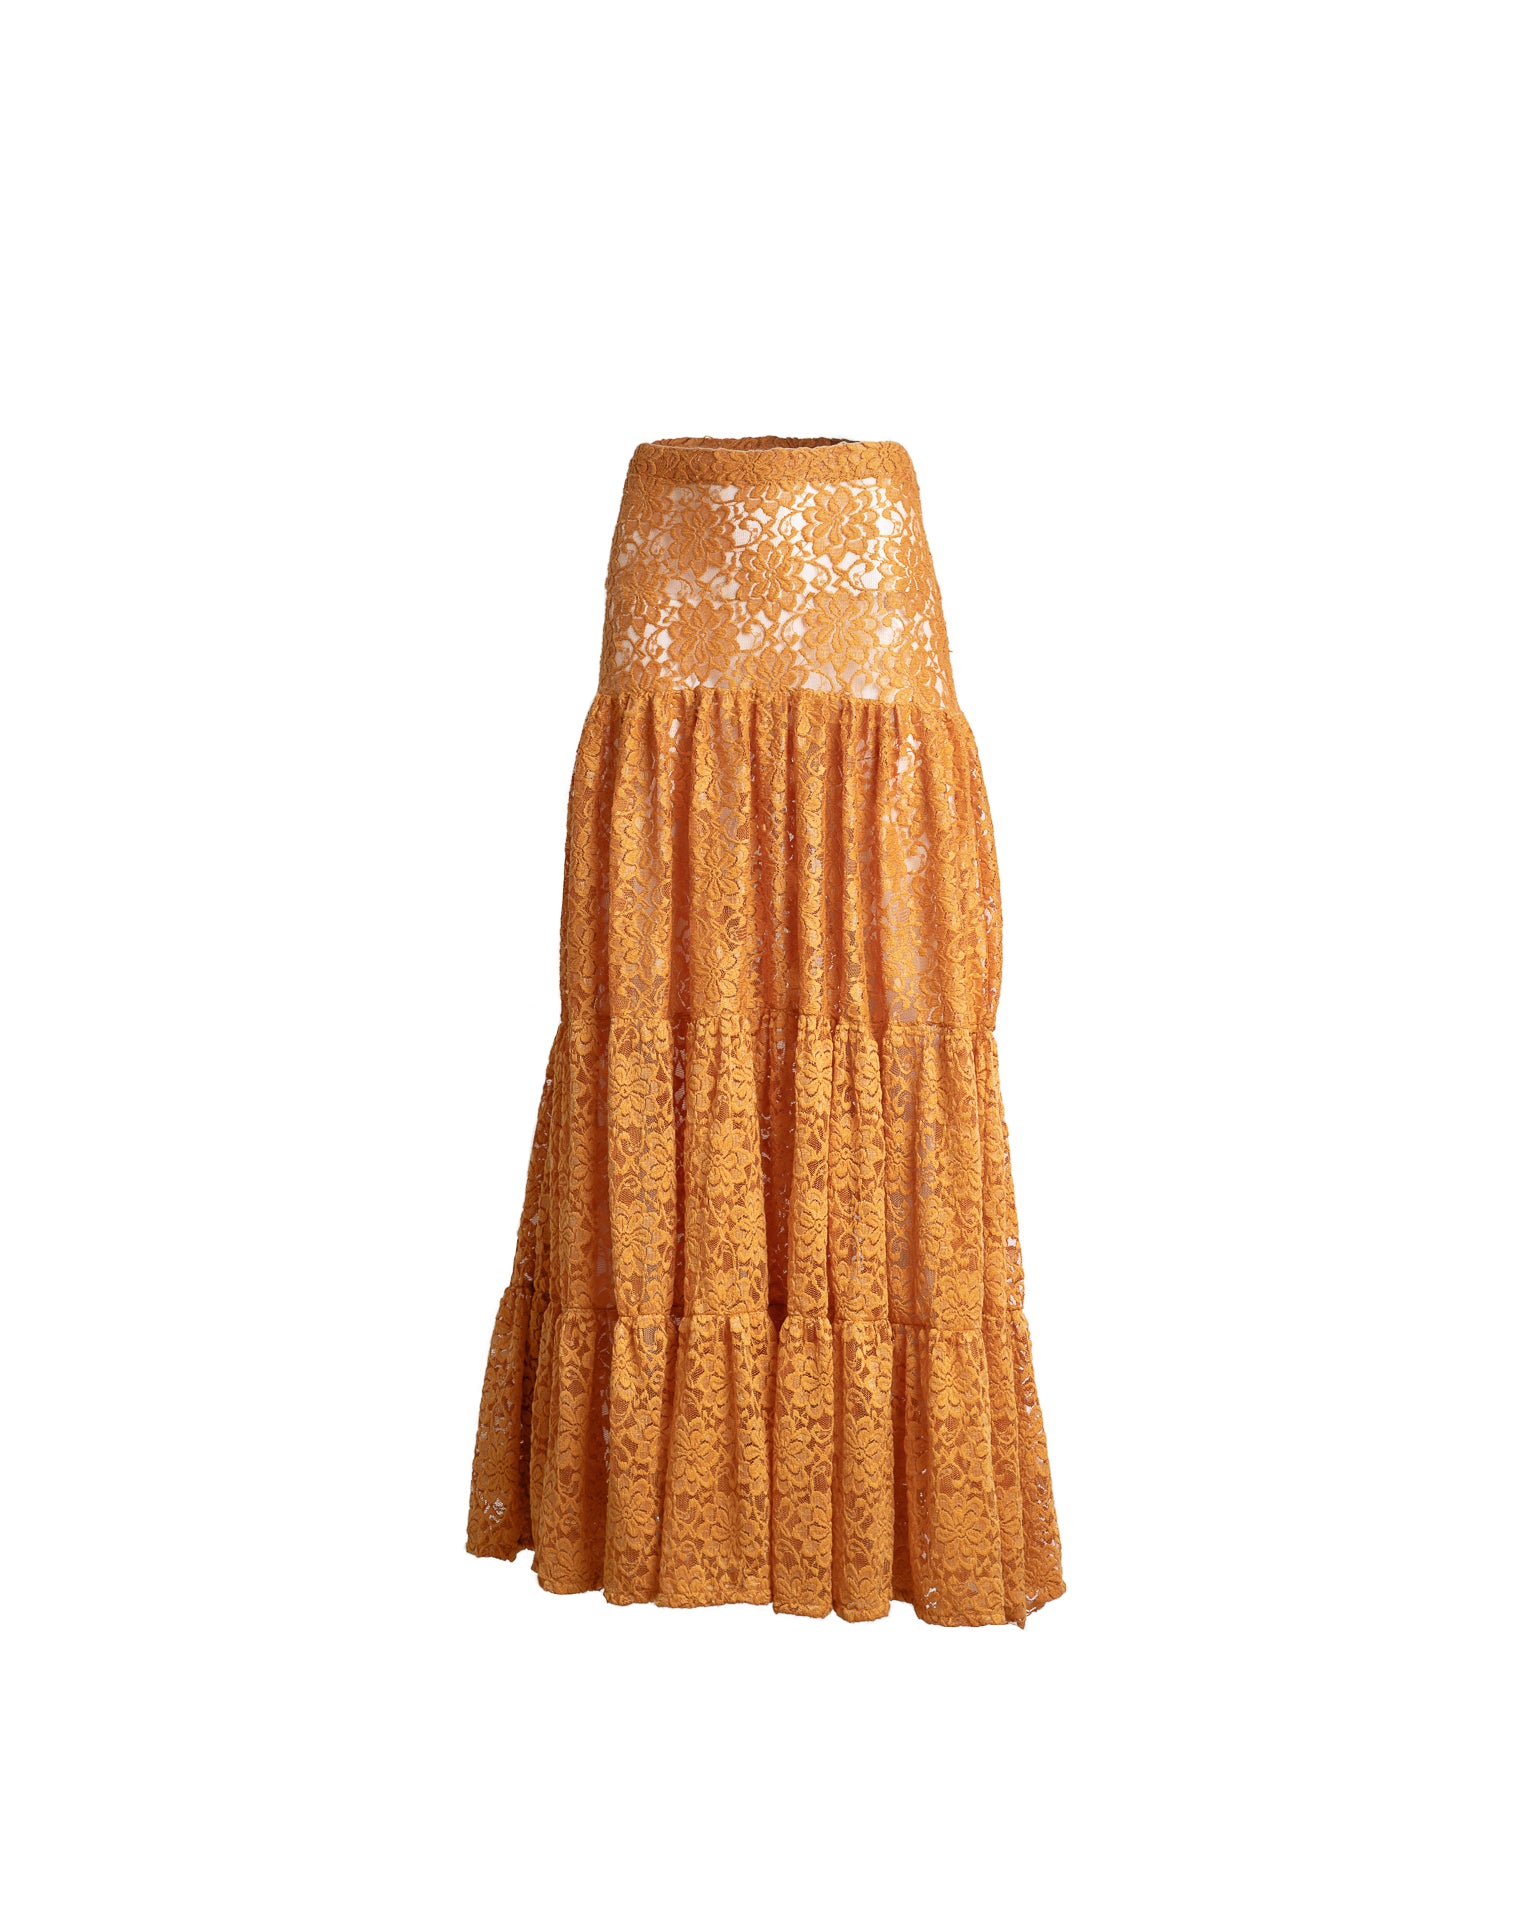 Antigua Skirt Macarena Mustard Lace